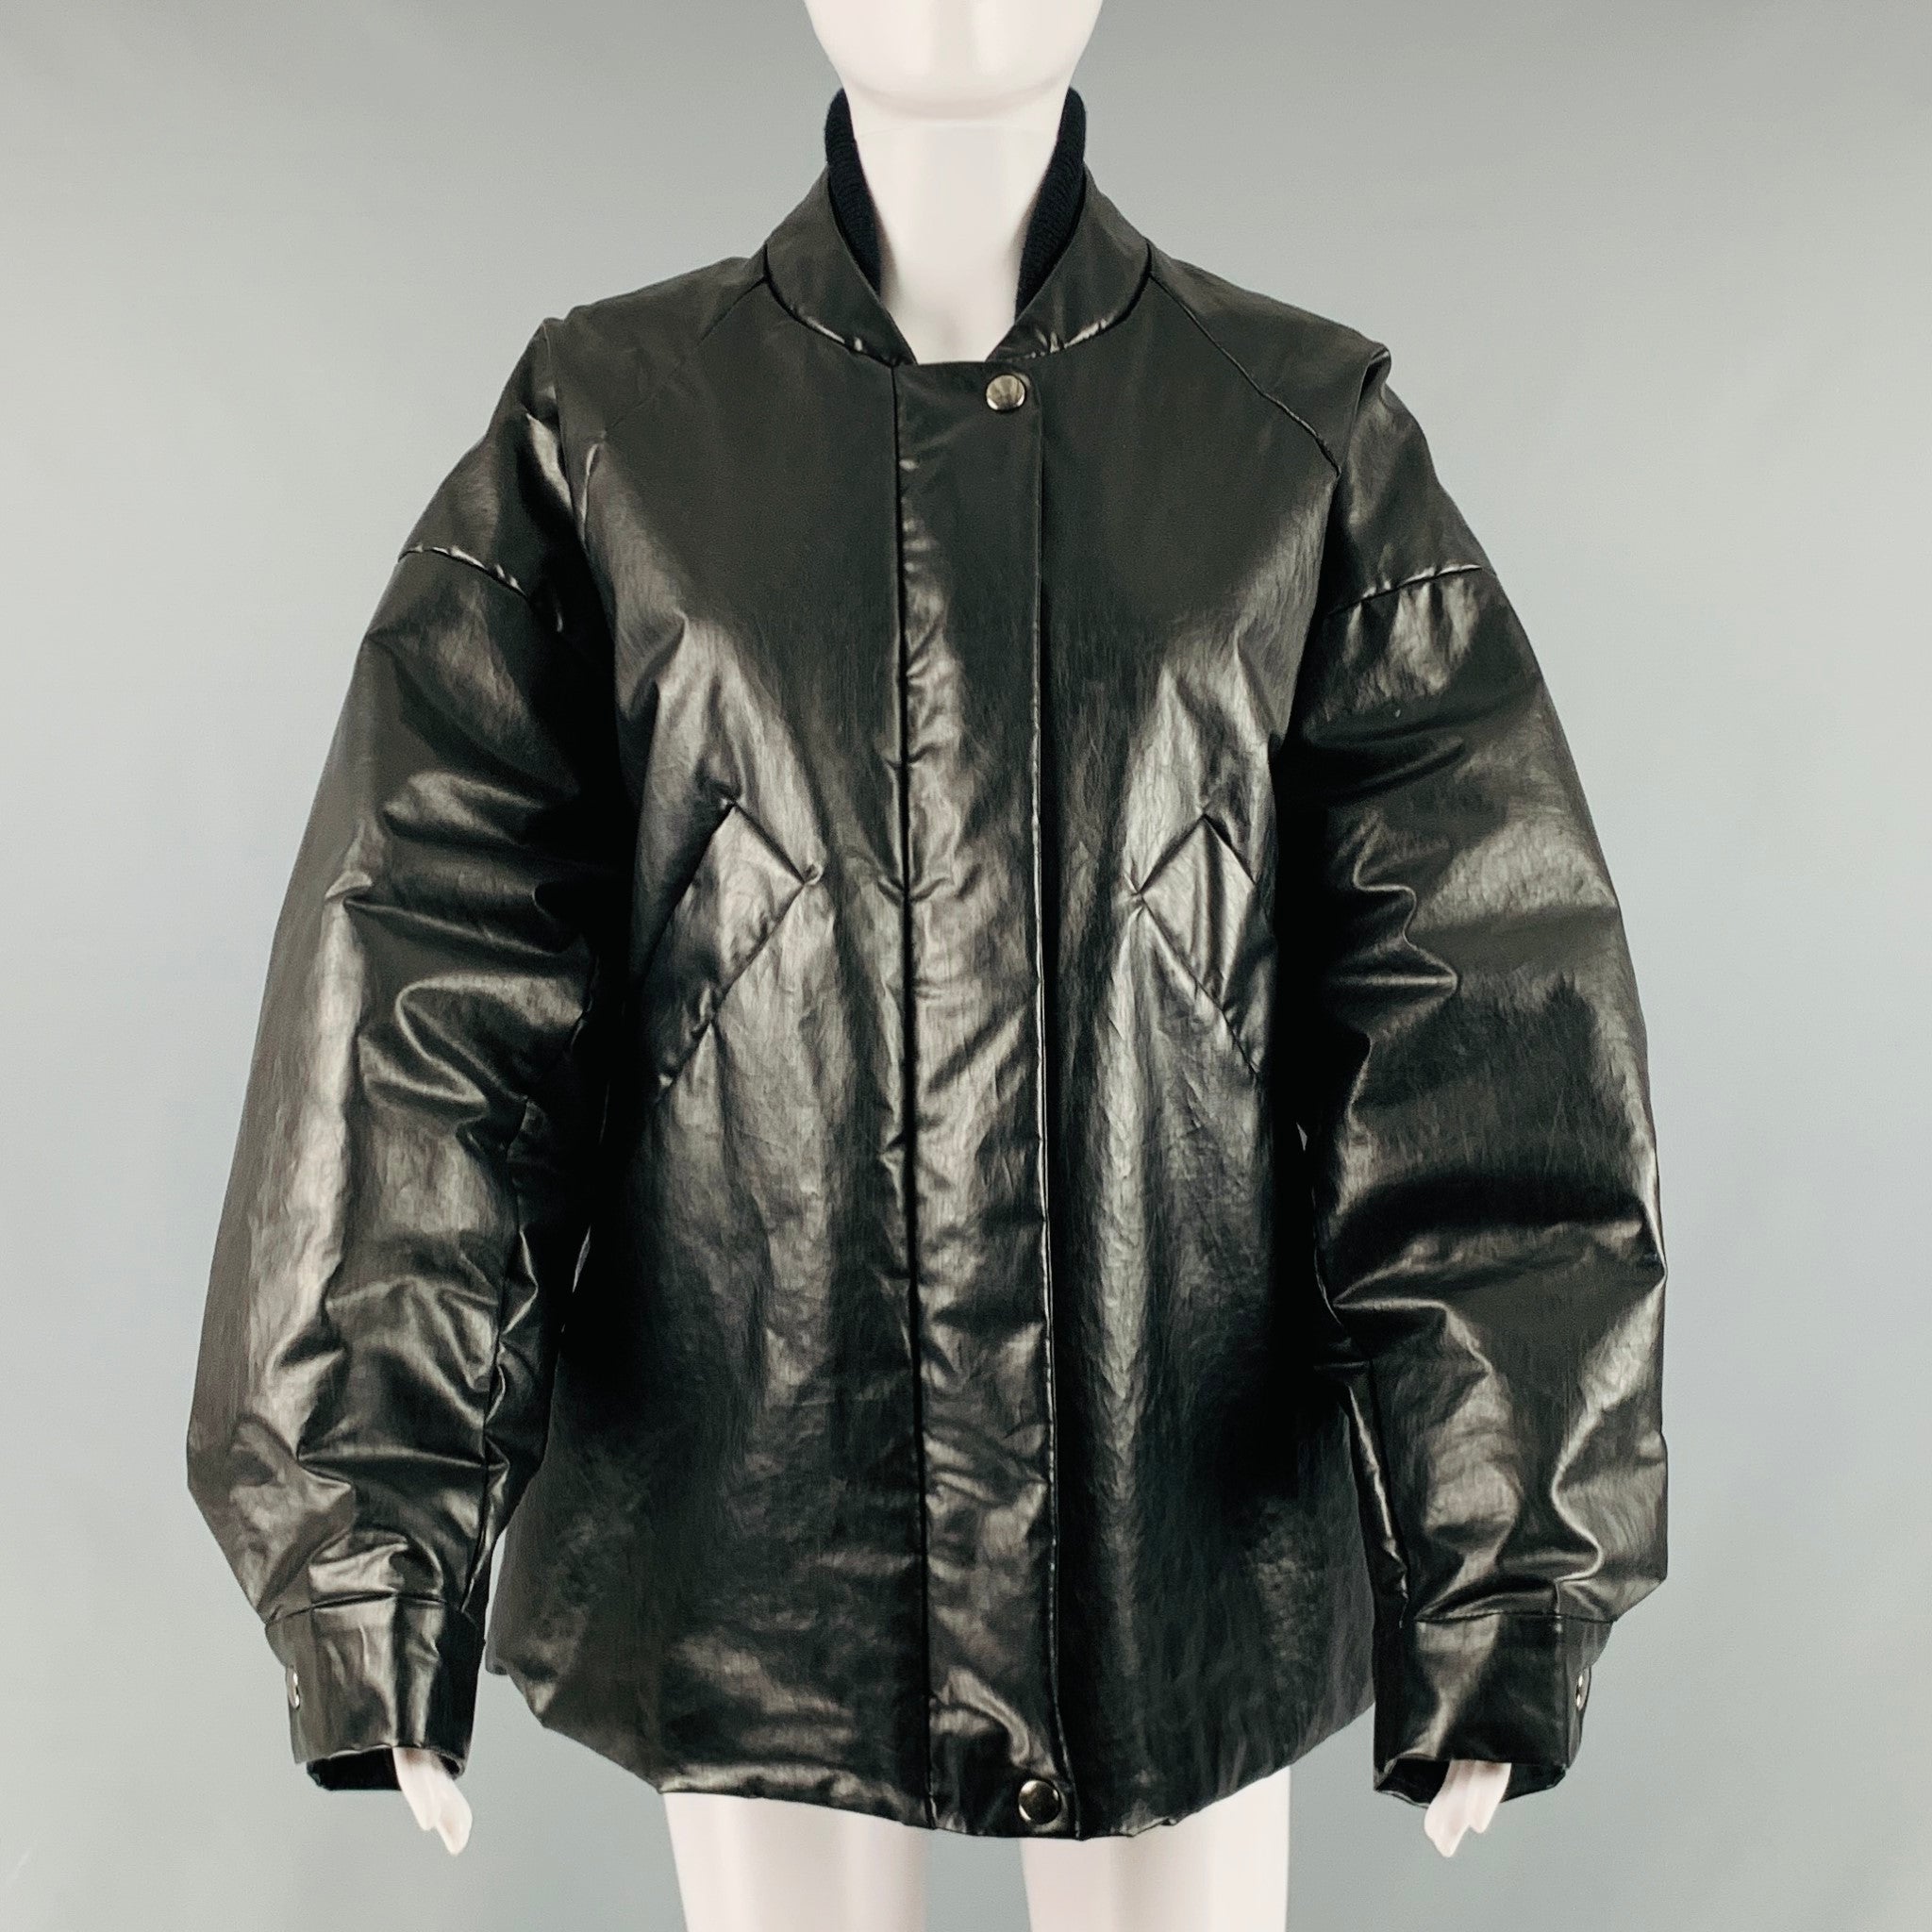 Padded cotton-blend jacket